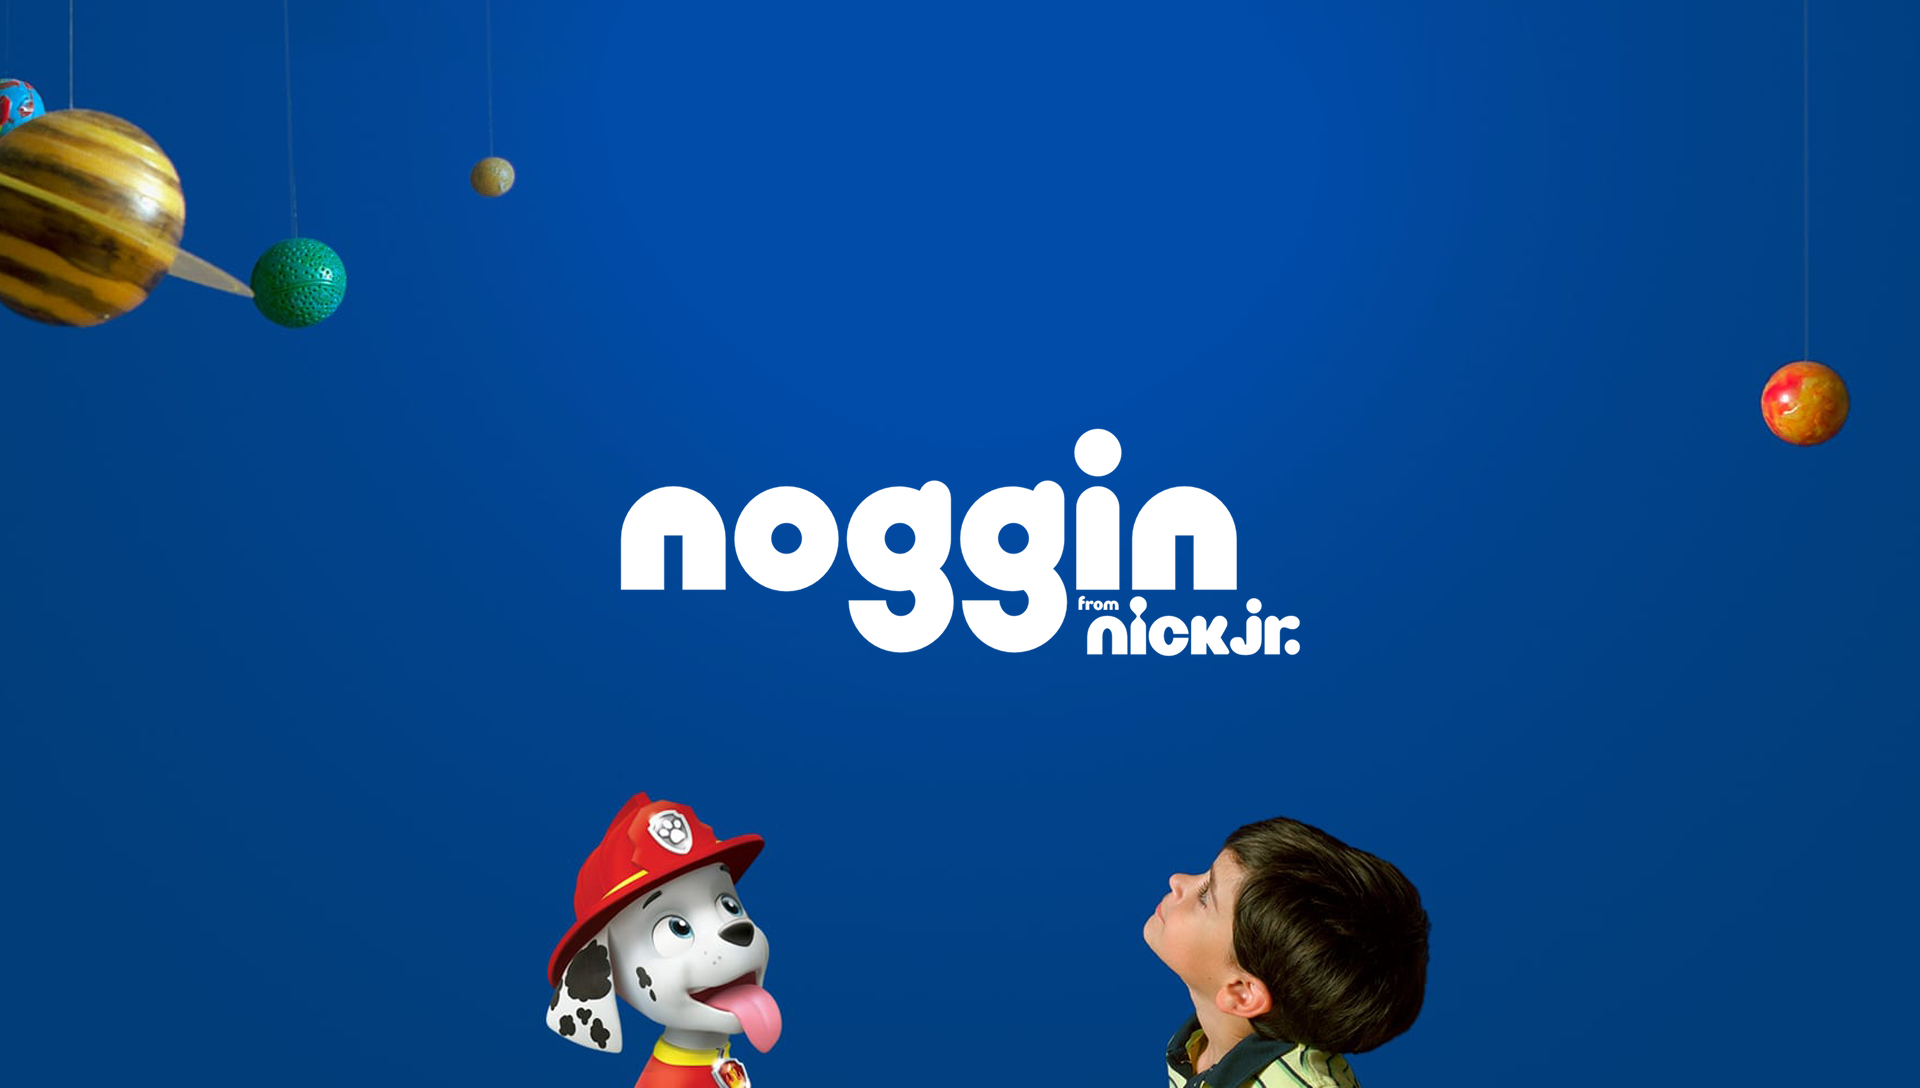 Nick Jr. Presents "Noggin."